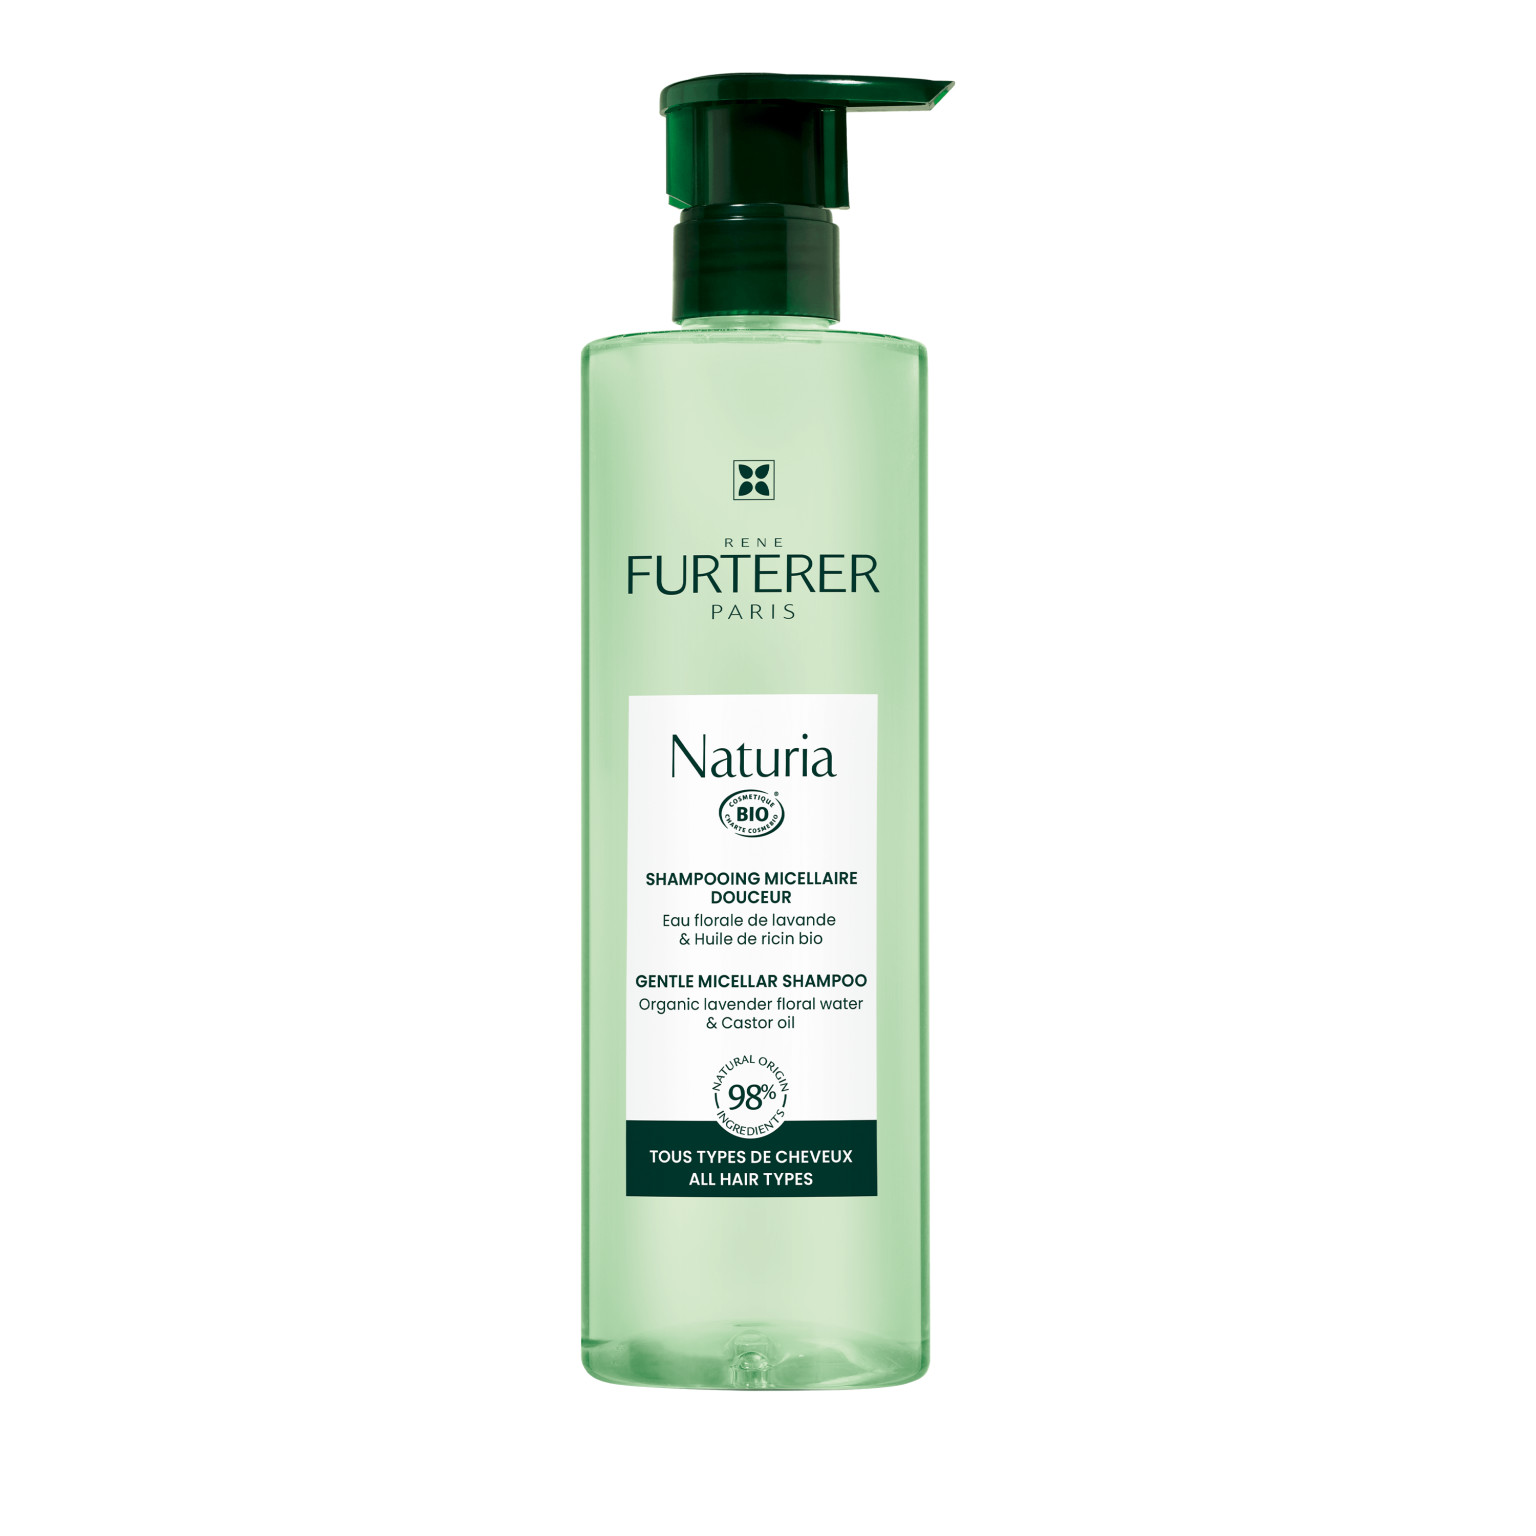 983542883 - Renè Furterer Naturia Shampoo micellare delicato 400ml - 4709302_1.jpg